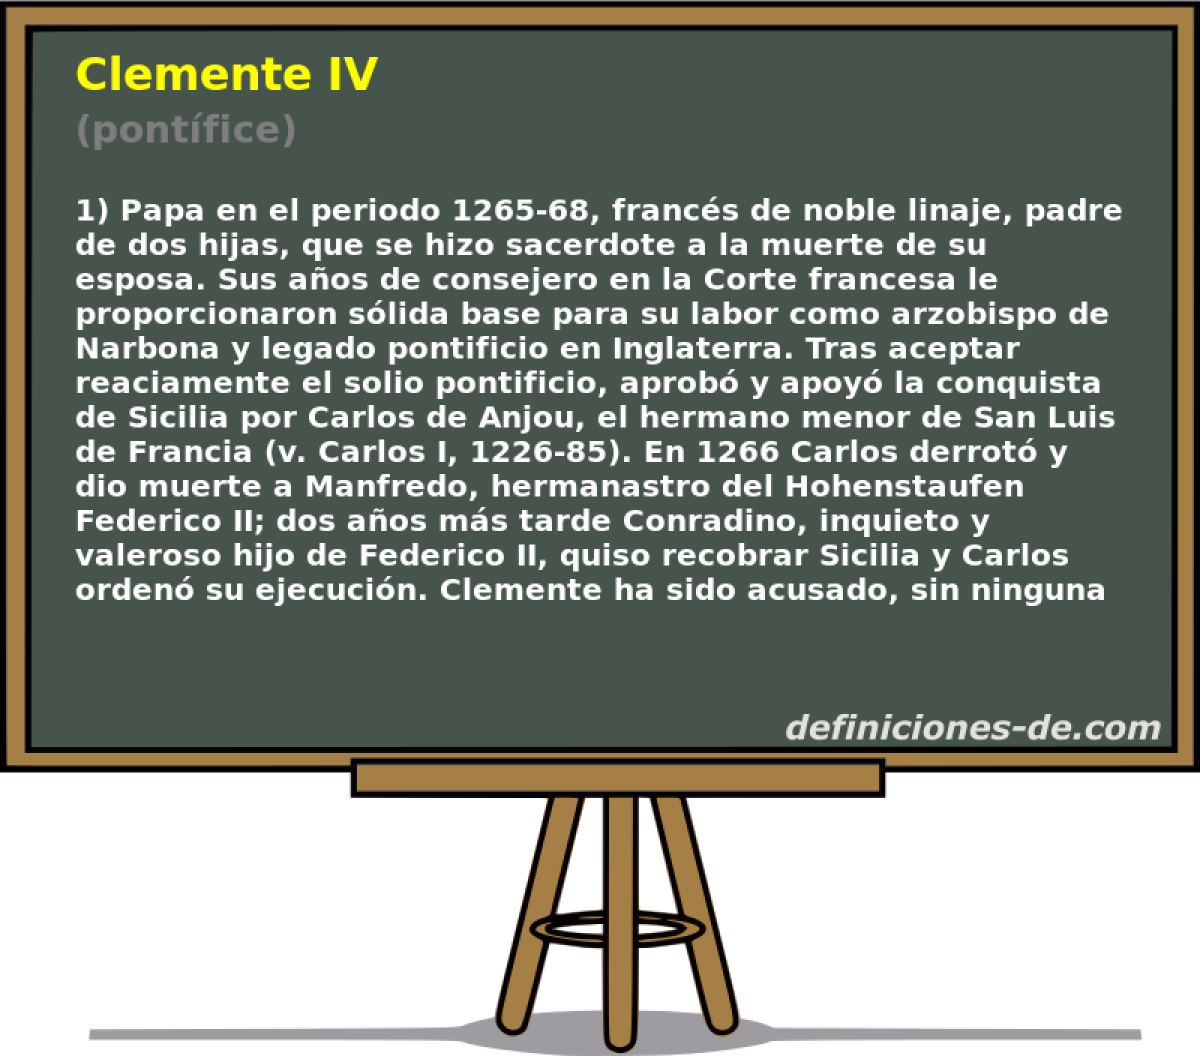 Clemente IV (pontfice)